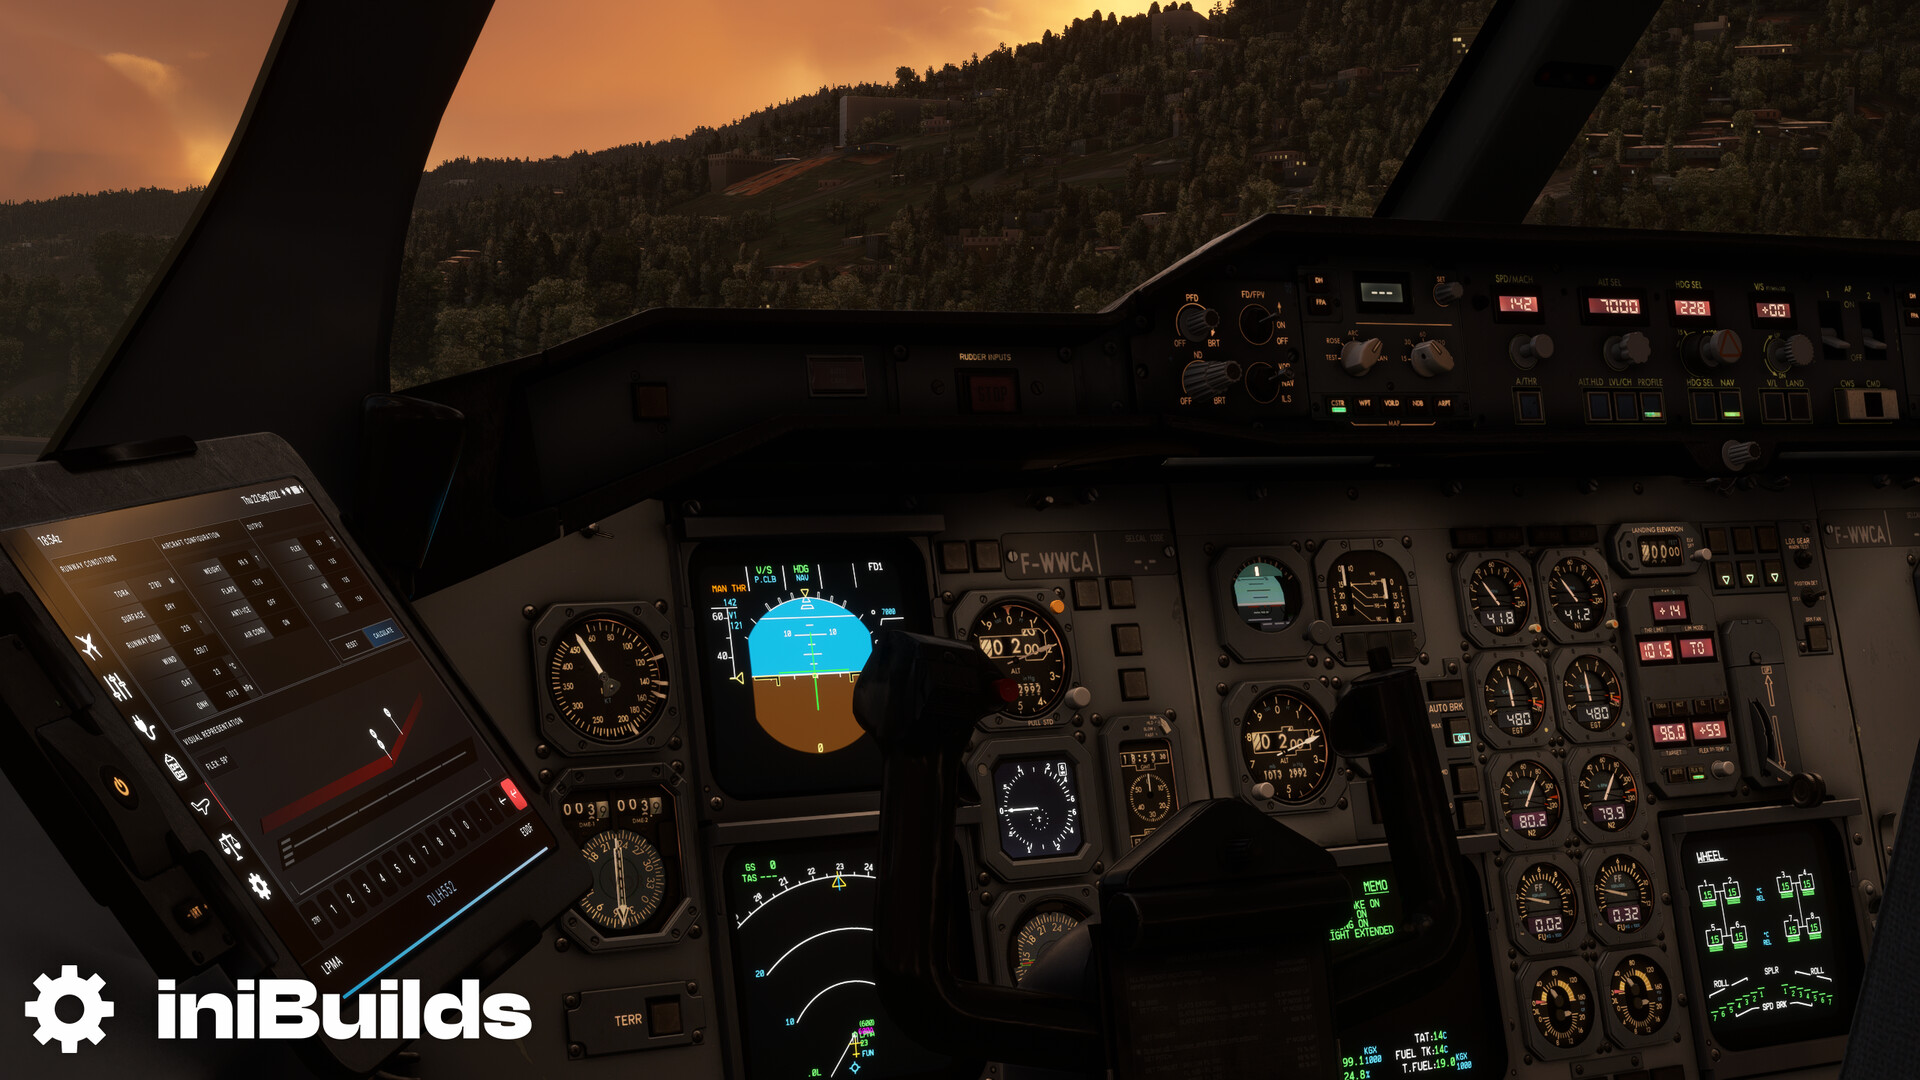 Microsoft Flight Simulator - Helicopters & Gliders Showcase - 40th